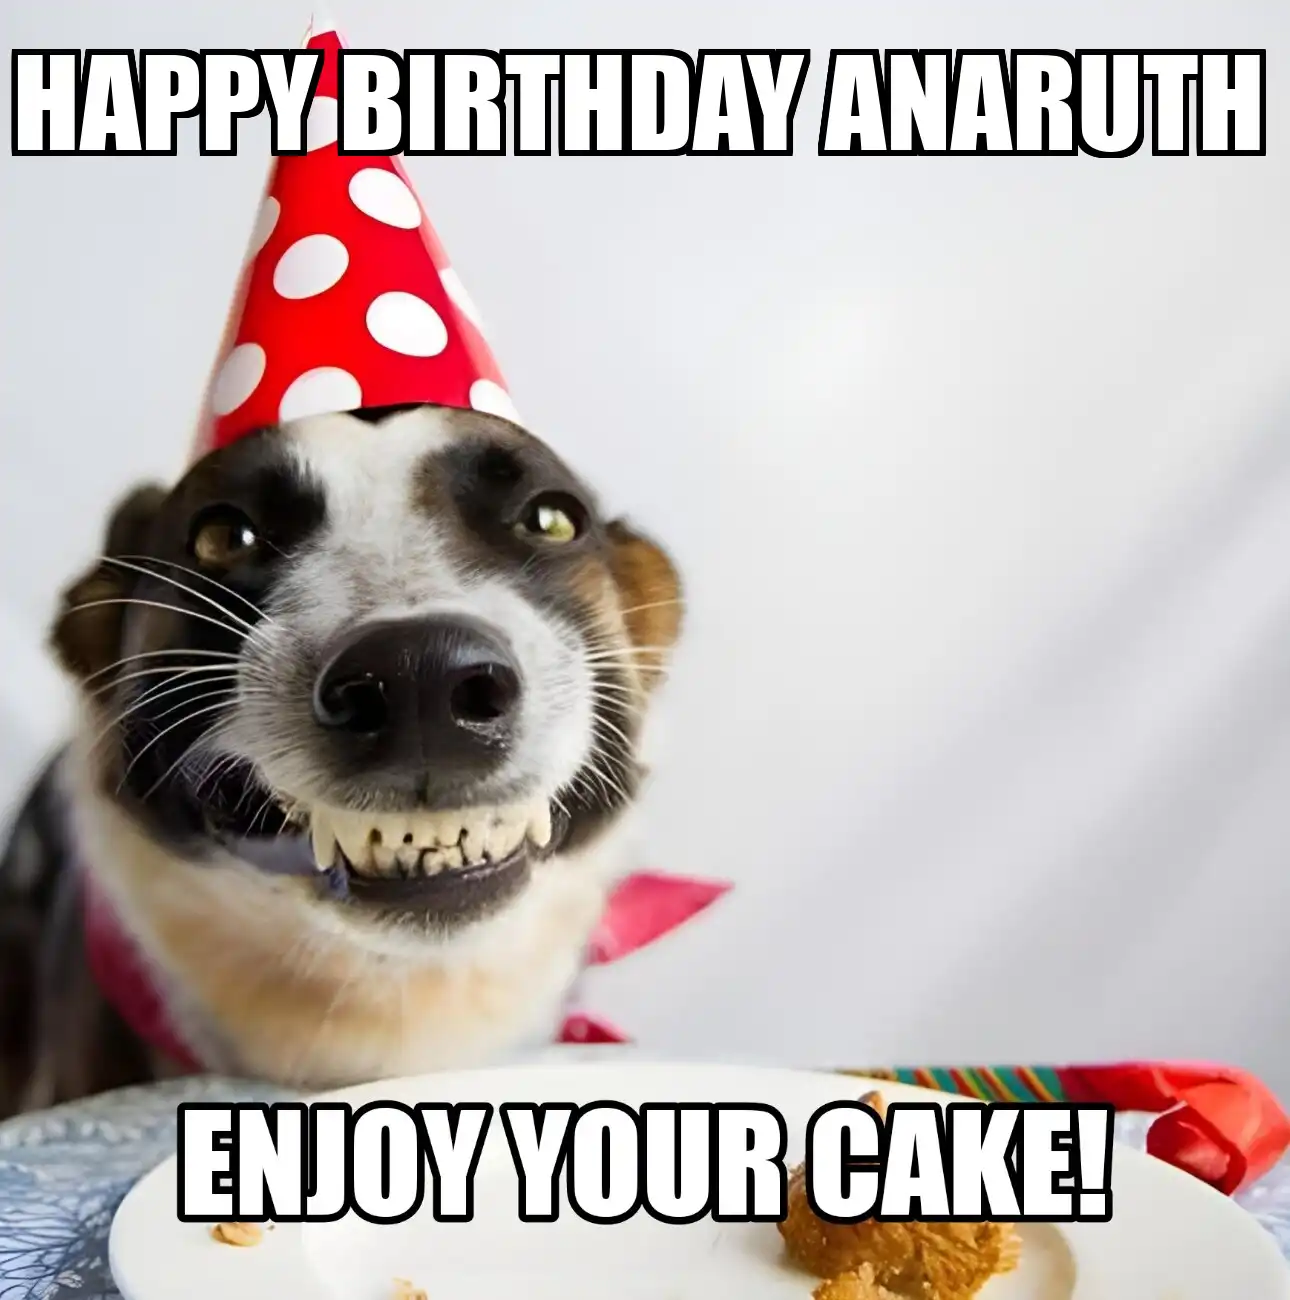 Happy Birthday Anaruth Enjoy Your Cake Dog Meme